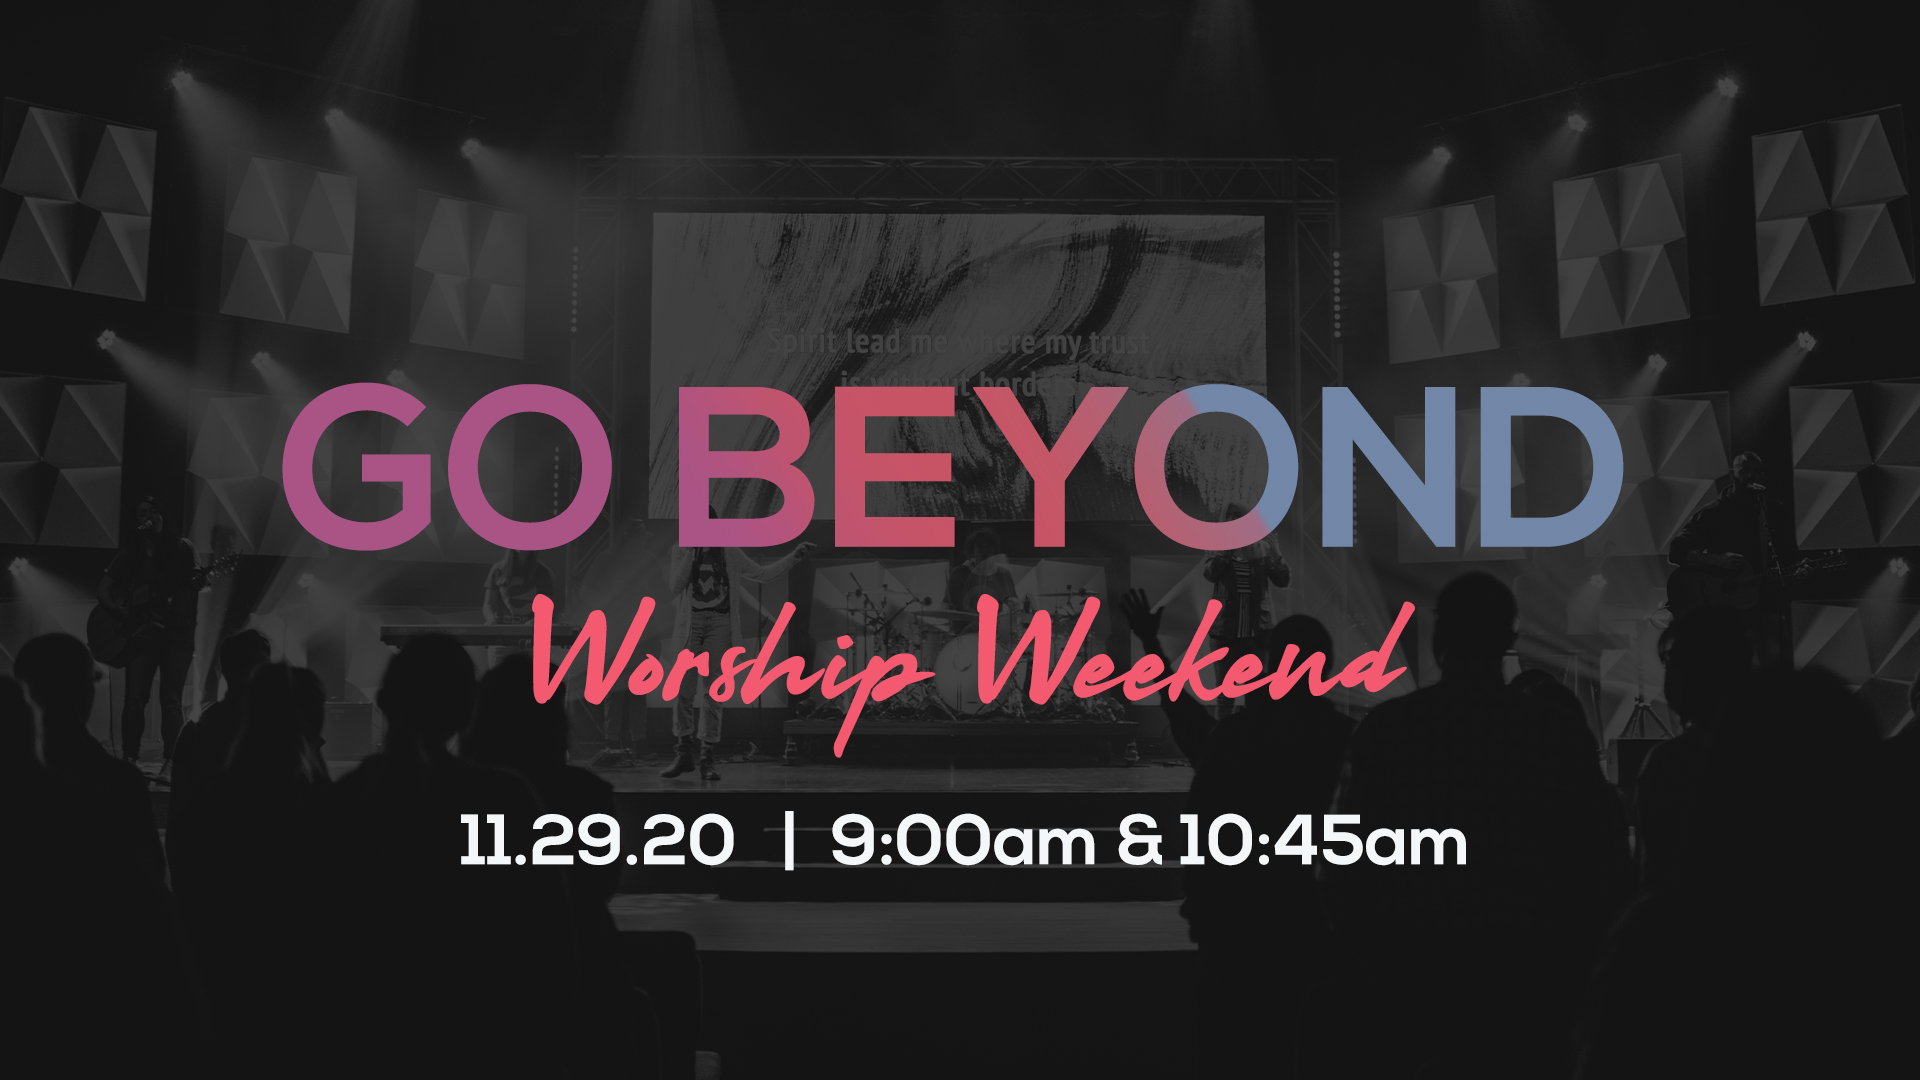 Go Beyond Worship Weekend 2020 copy image